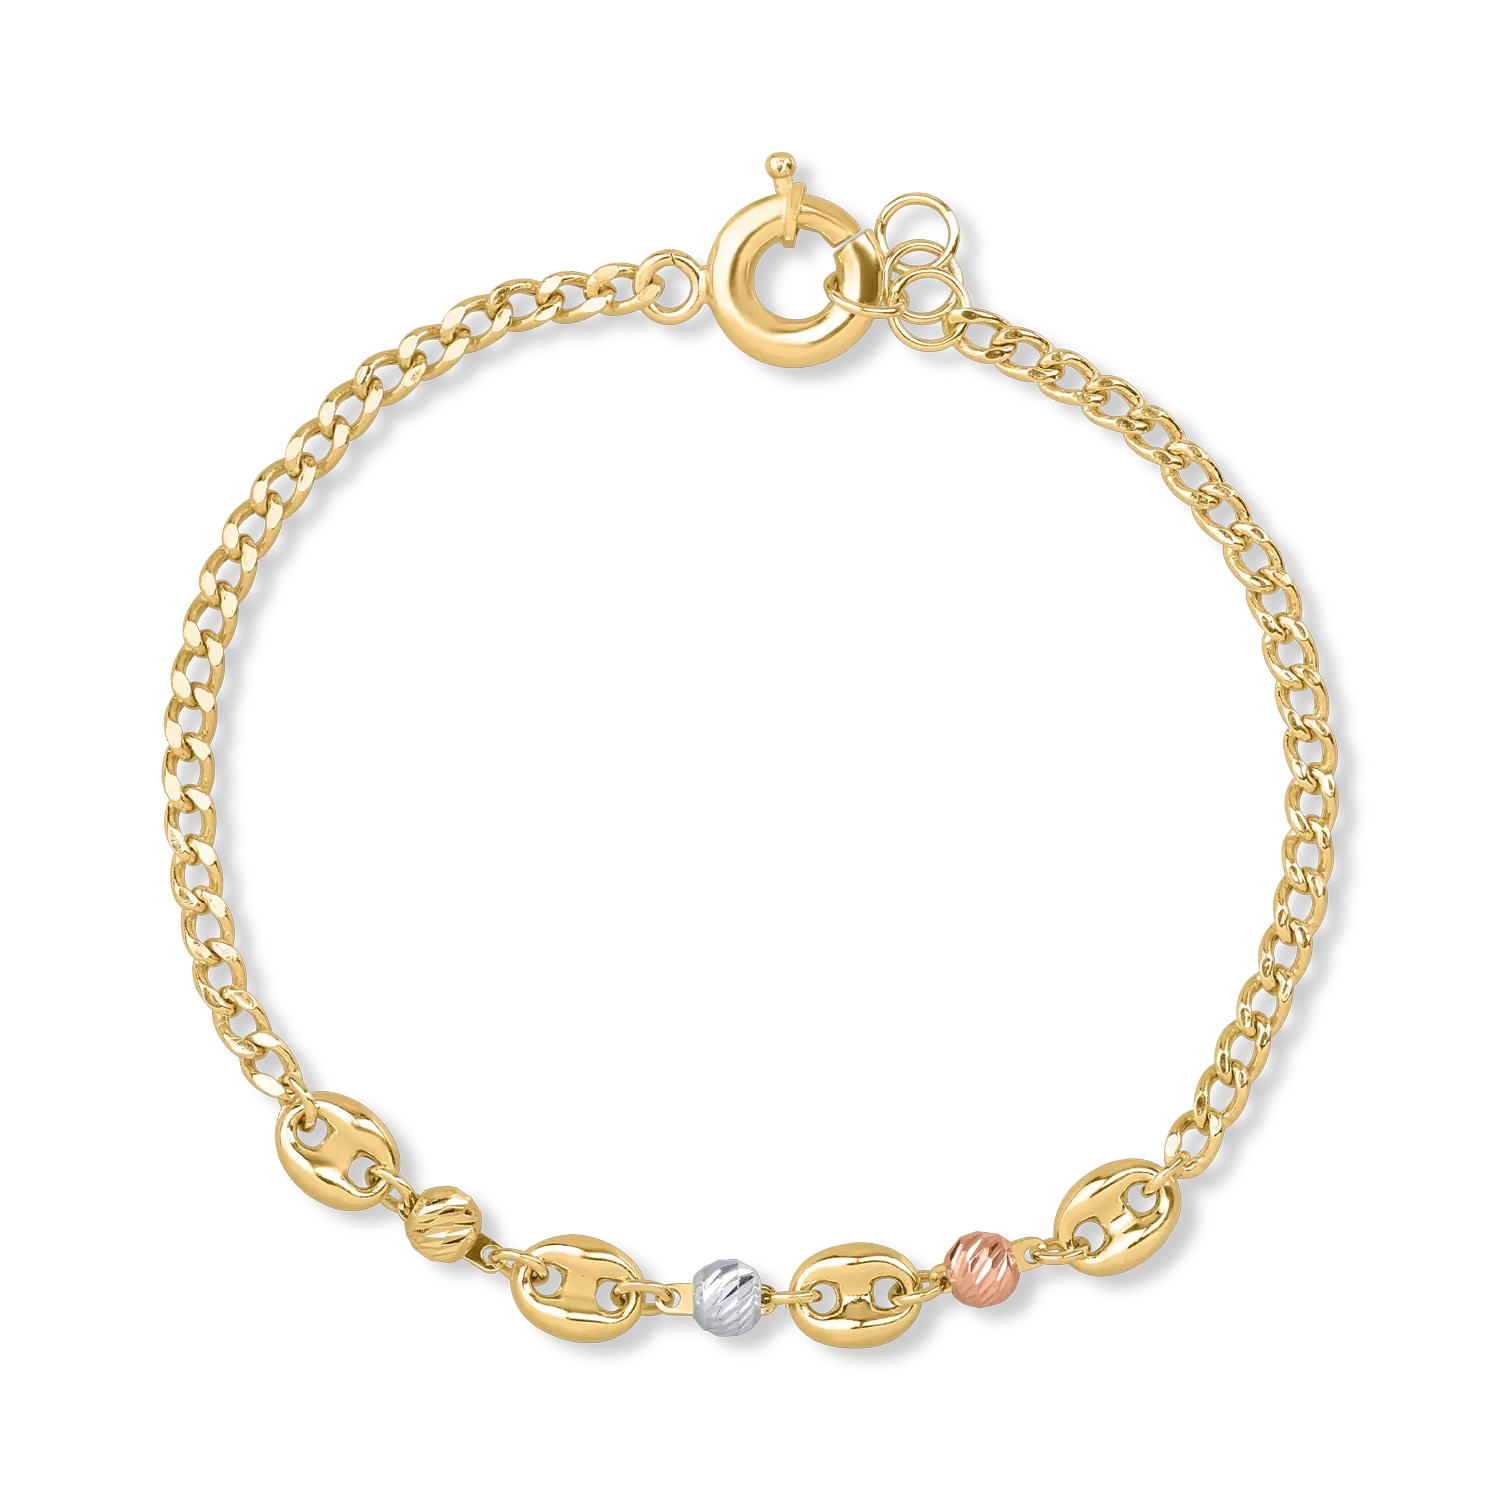 White-rose-yellow gold bracelet